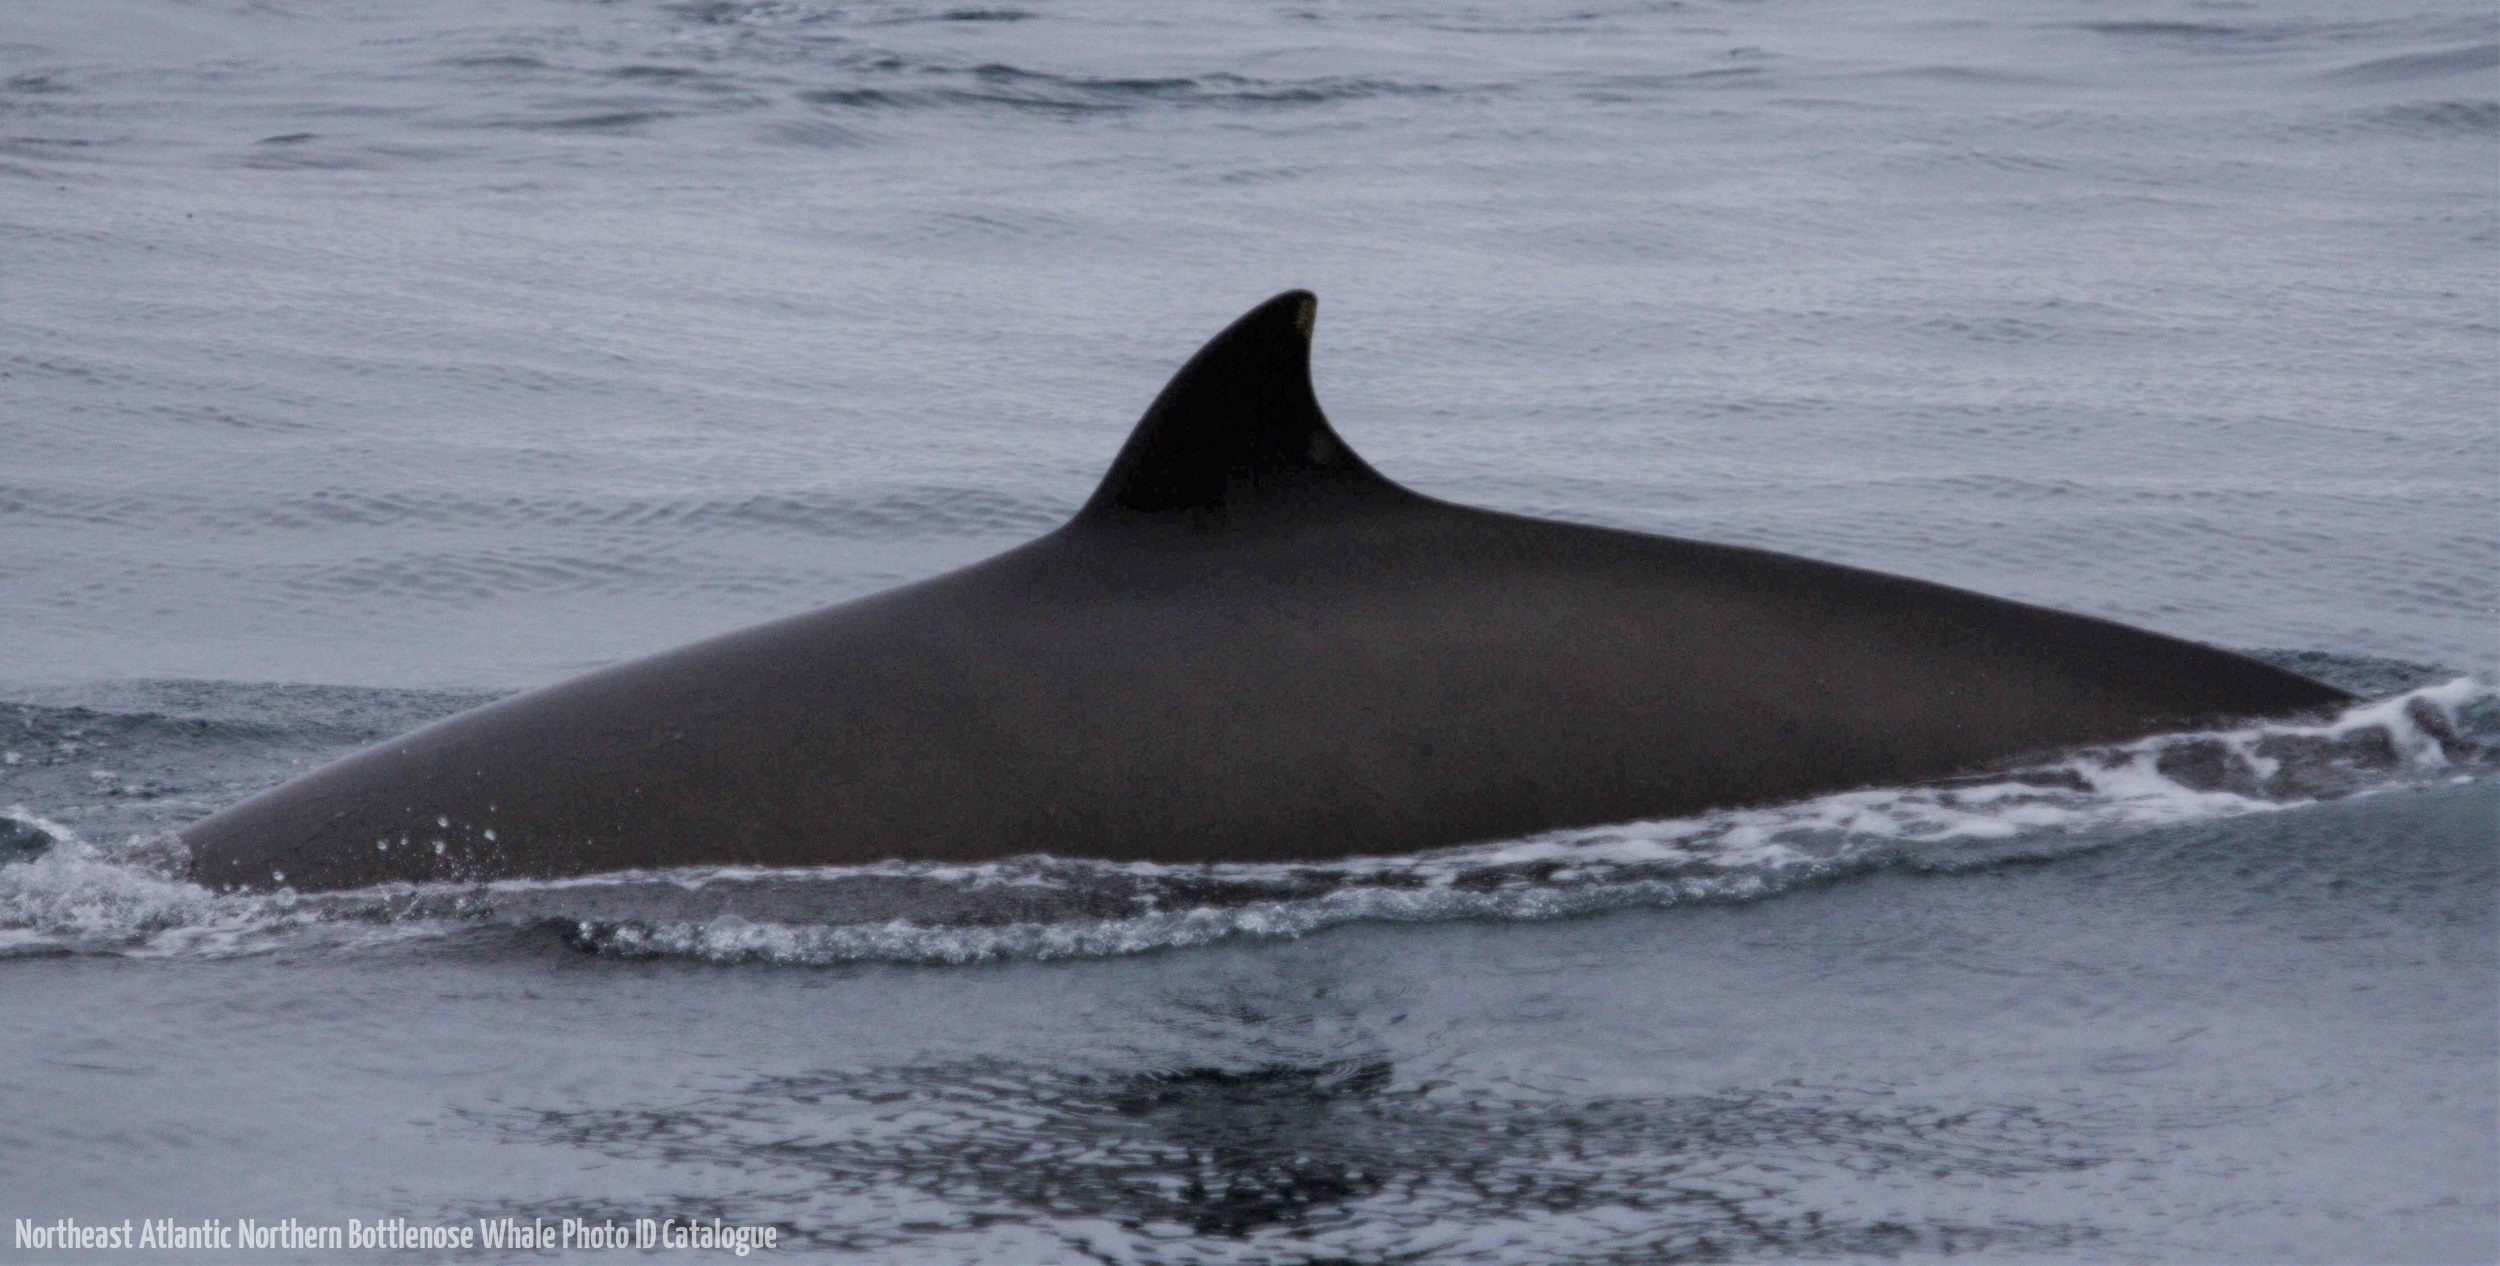 Whale ID: 0032,  Date taken: 10-06-2014,  Photographer: Lucia M. Martín López